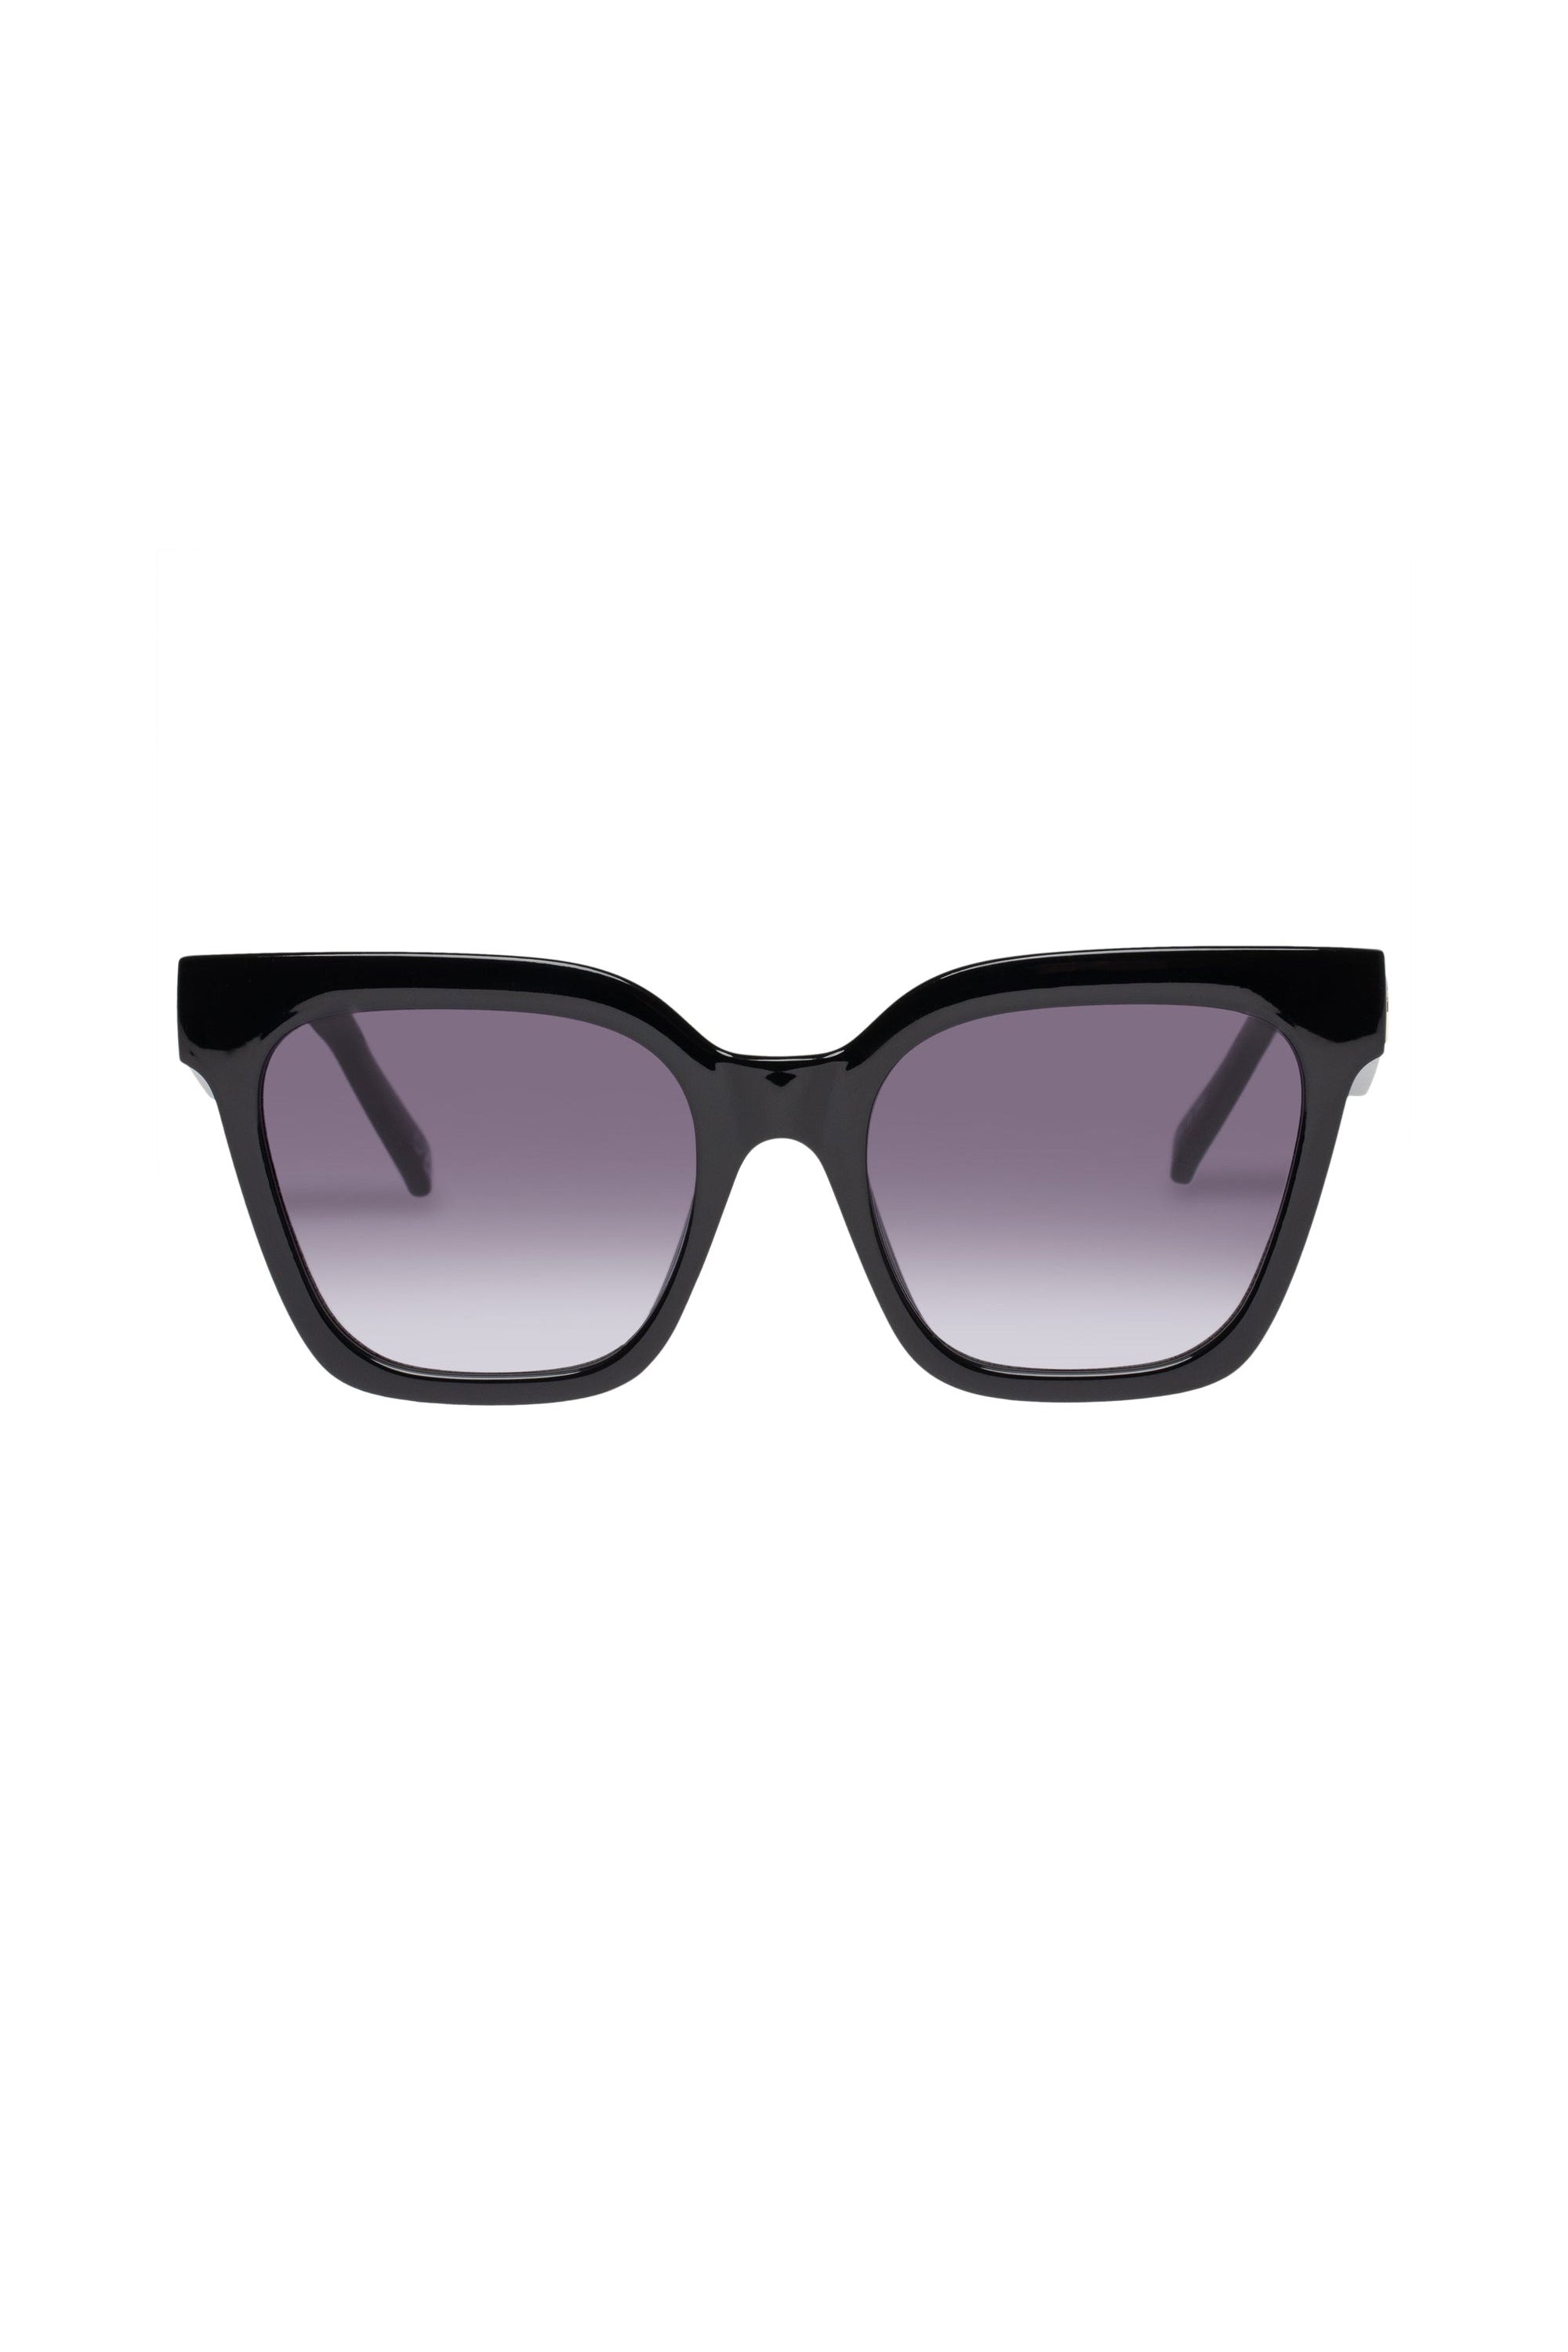 Le Specs Star Glow Sunglasses - Black - RUM Amsterdam